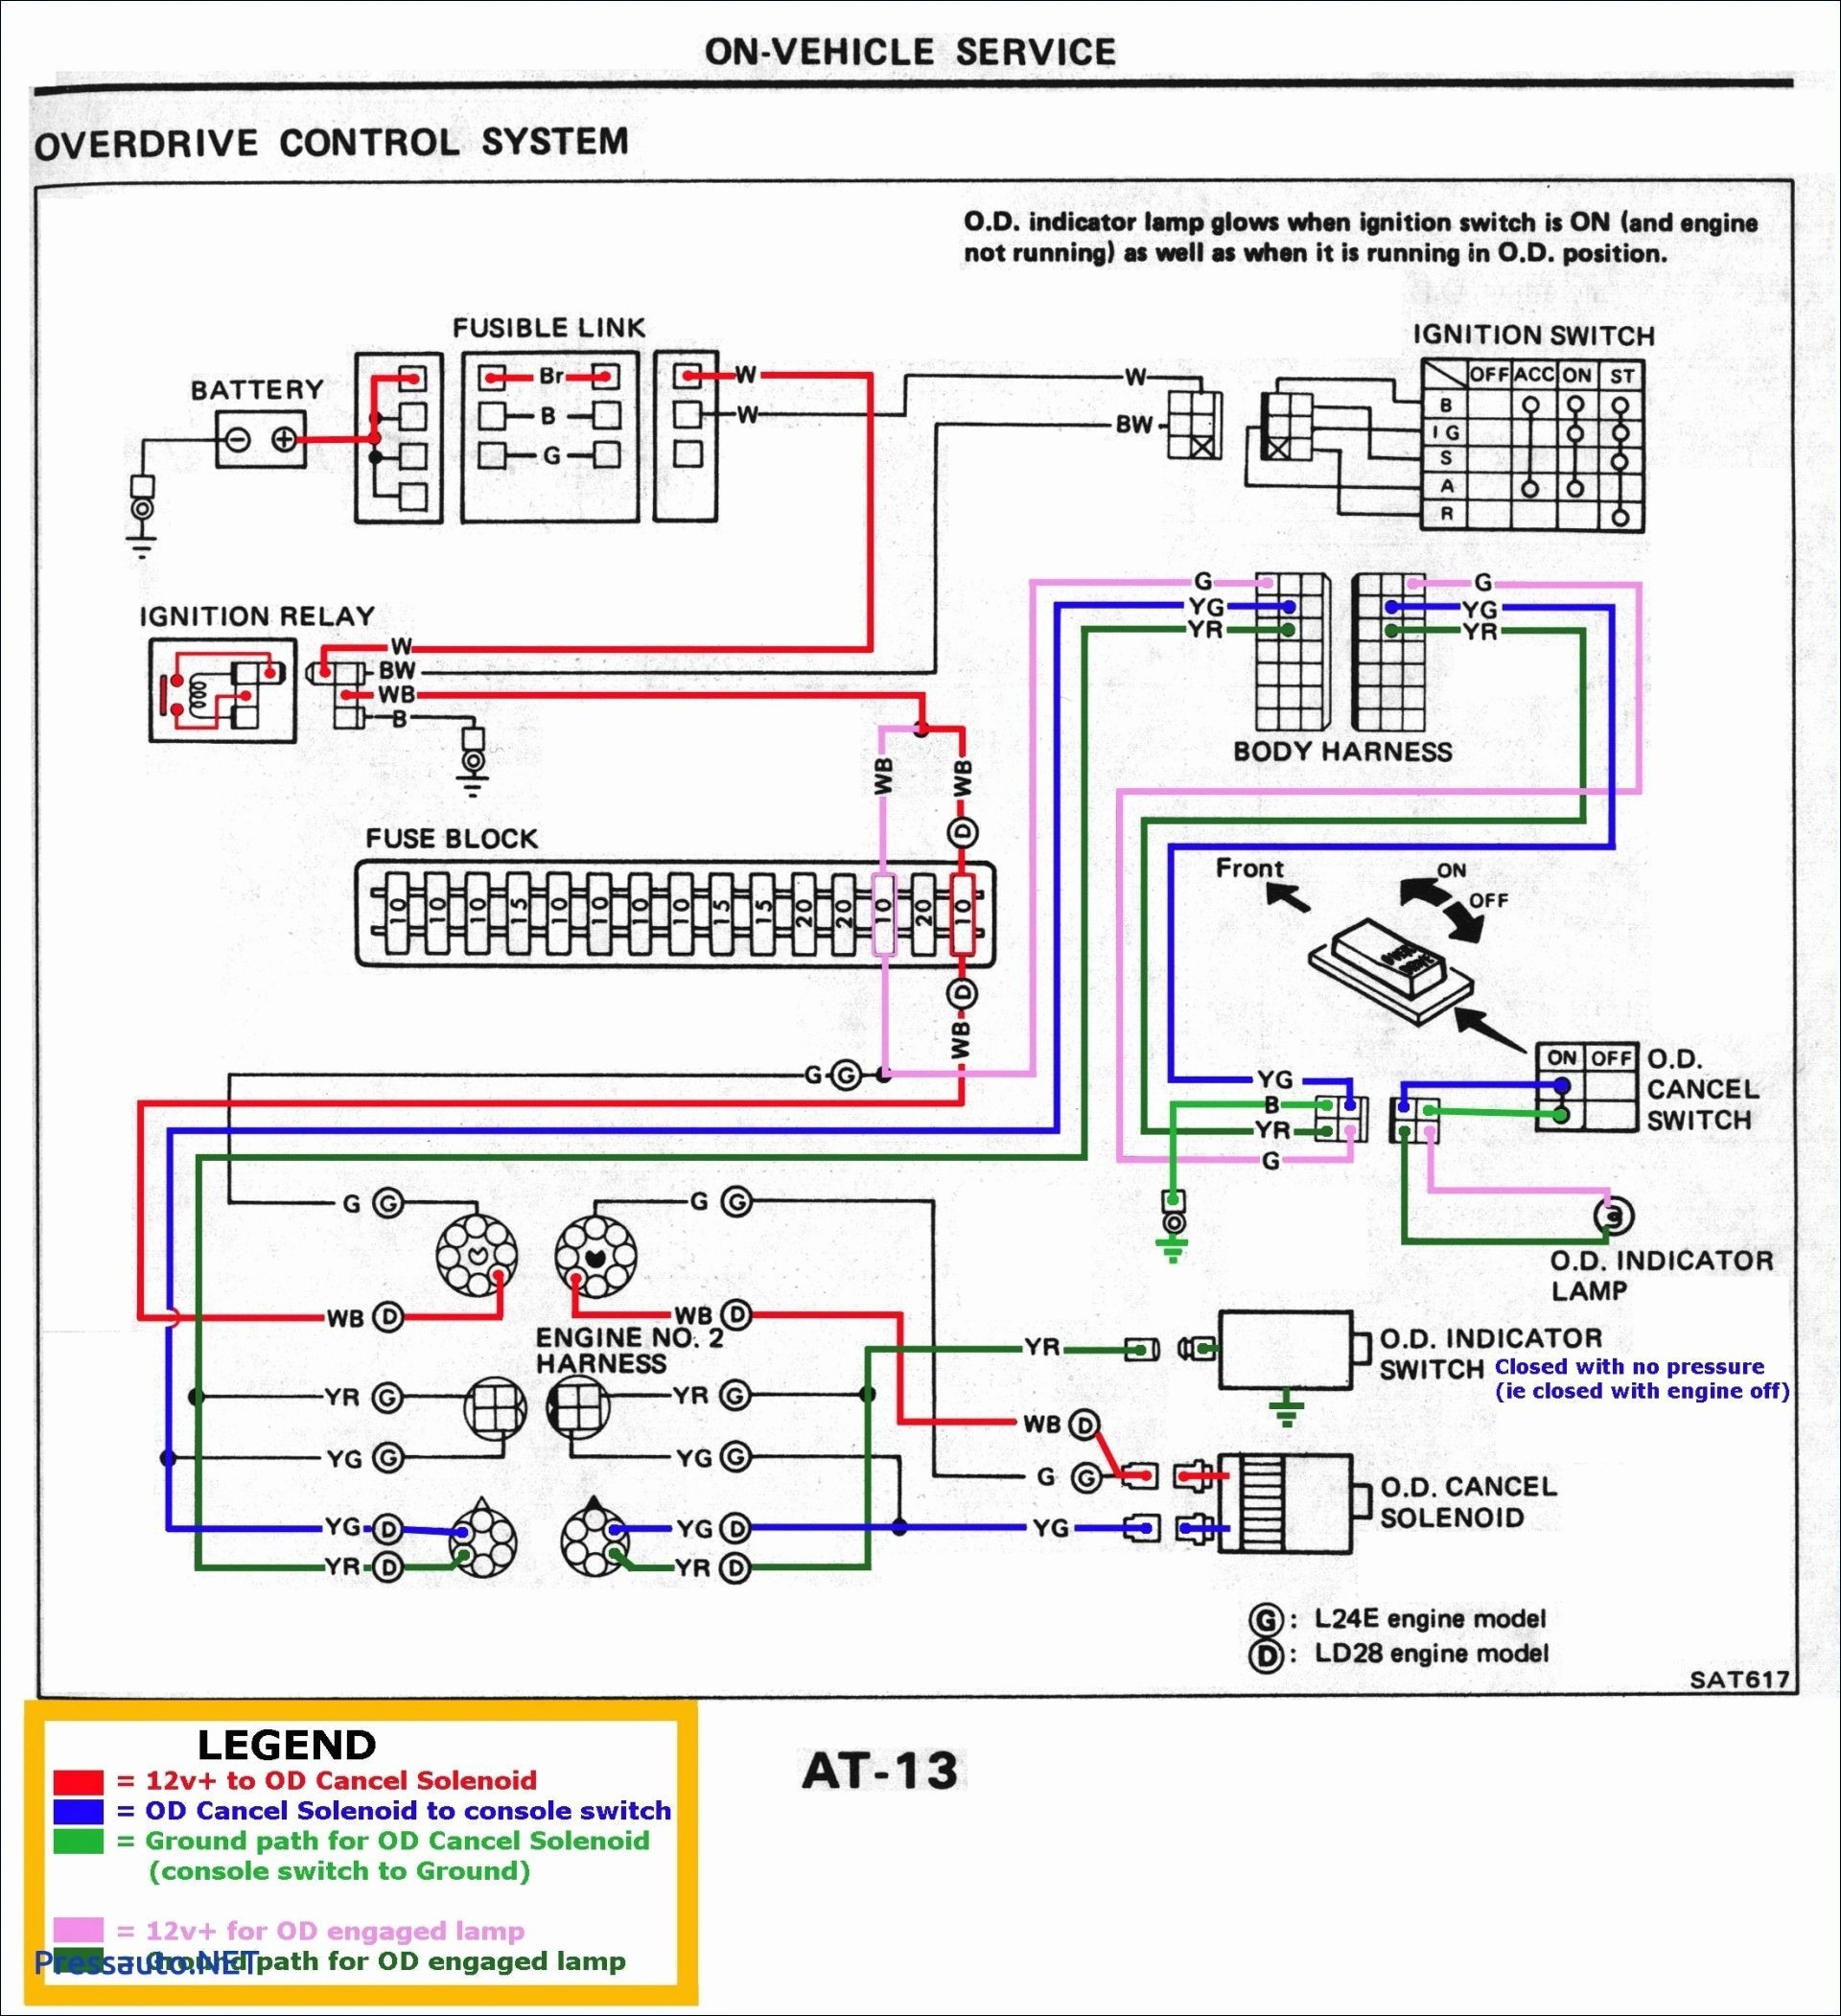 Current Transformer Wiring Diagram Bmw Factory Wiring Diagrams 1998 Wiring Diagram toolbox Of Current Transformer Wiring Diagram